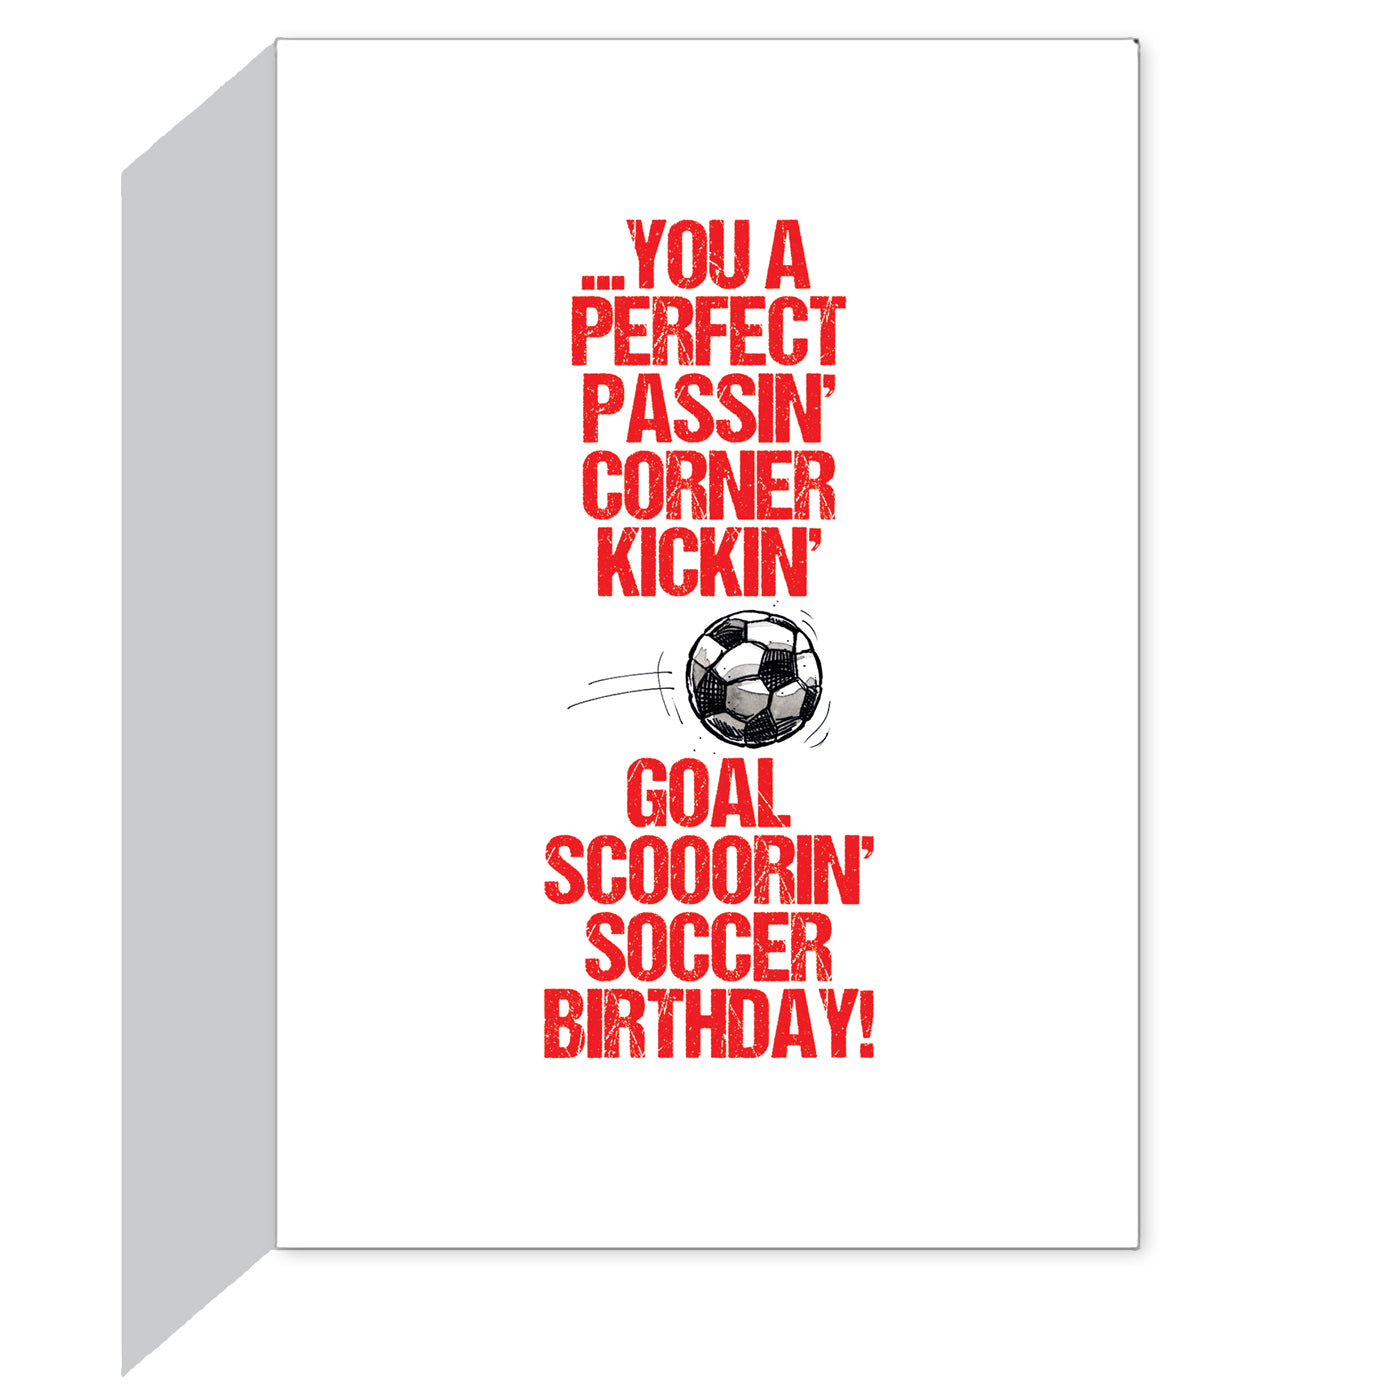 SOCCER BOYS Birthday Power Player Birthday Card 1-Pack (5x7) Illustrated Sports Birthday Greeting Cards